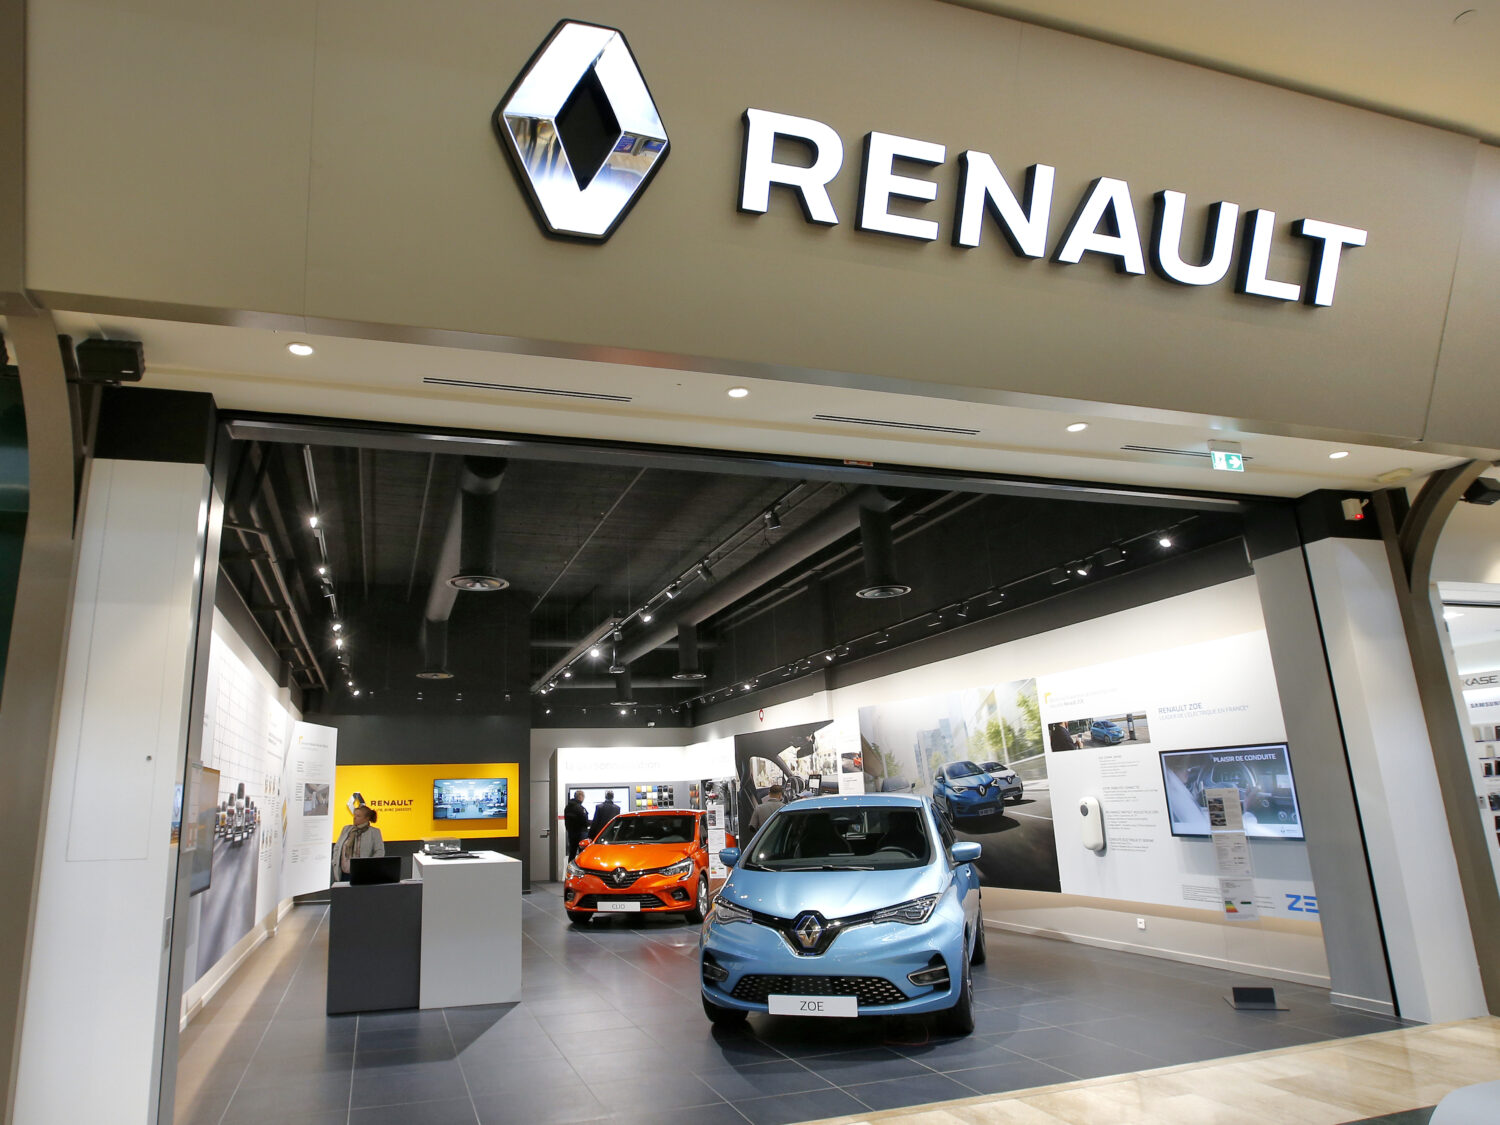 2019 - Renault City concept store